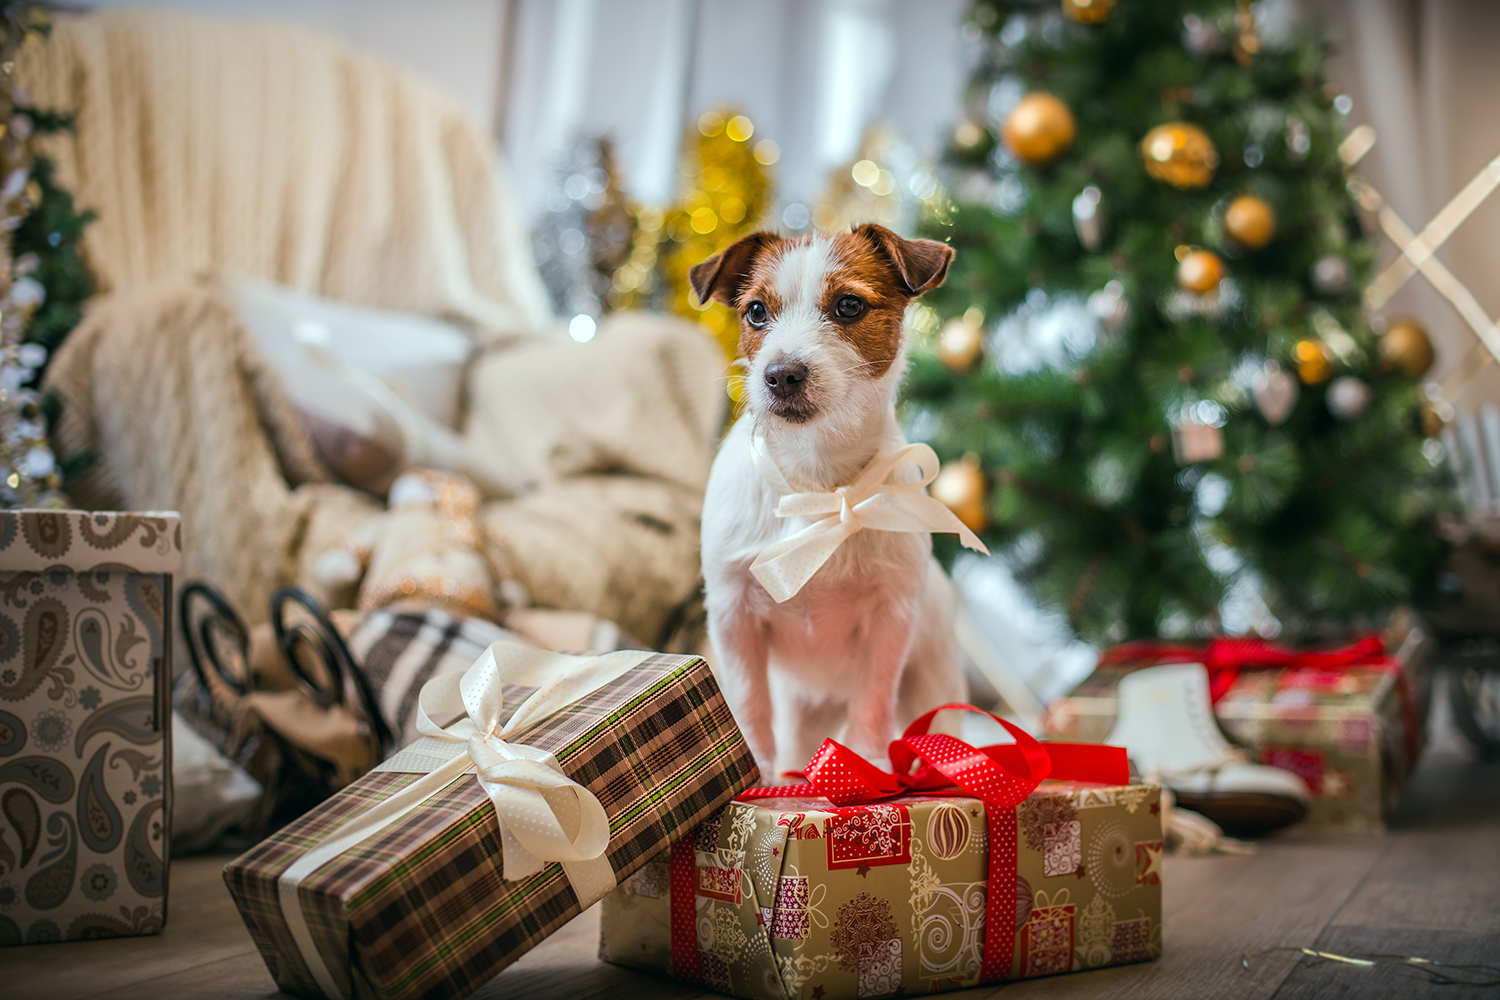 Christmas foods you really shouldn’t give your dog